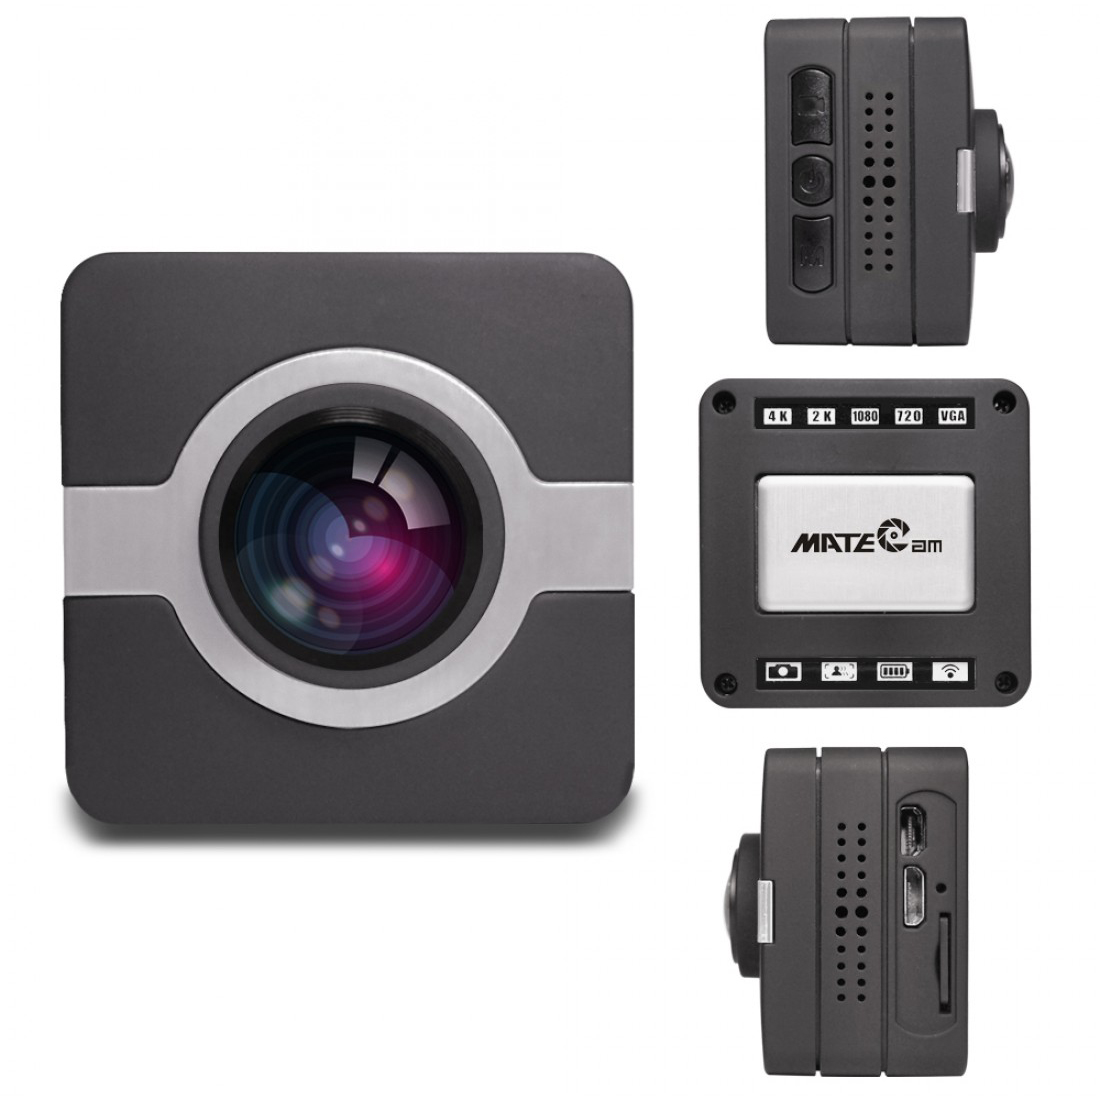 https://www.matecamera.com/uploads/Matecam-X1-Mini-DVR-Wifi-APP-HD-1080P-4K-HI-Bike-Helmet-Cam-Sports-DV-Action-DVR-Waterproof-Dash-Camera-SONY-LENS-FHD-Car-Dash-Cam-Action-Camera-Cam-Camcorder-Black-box-Red-1.jpg